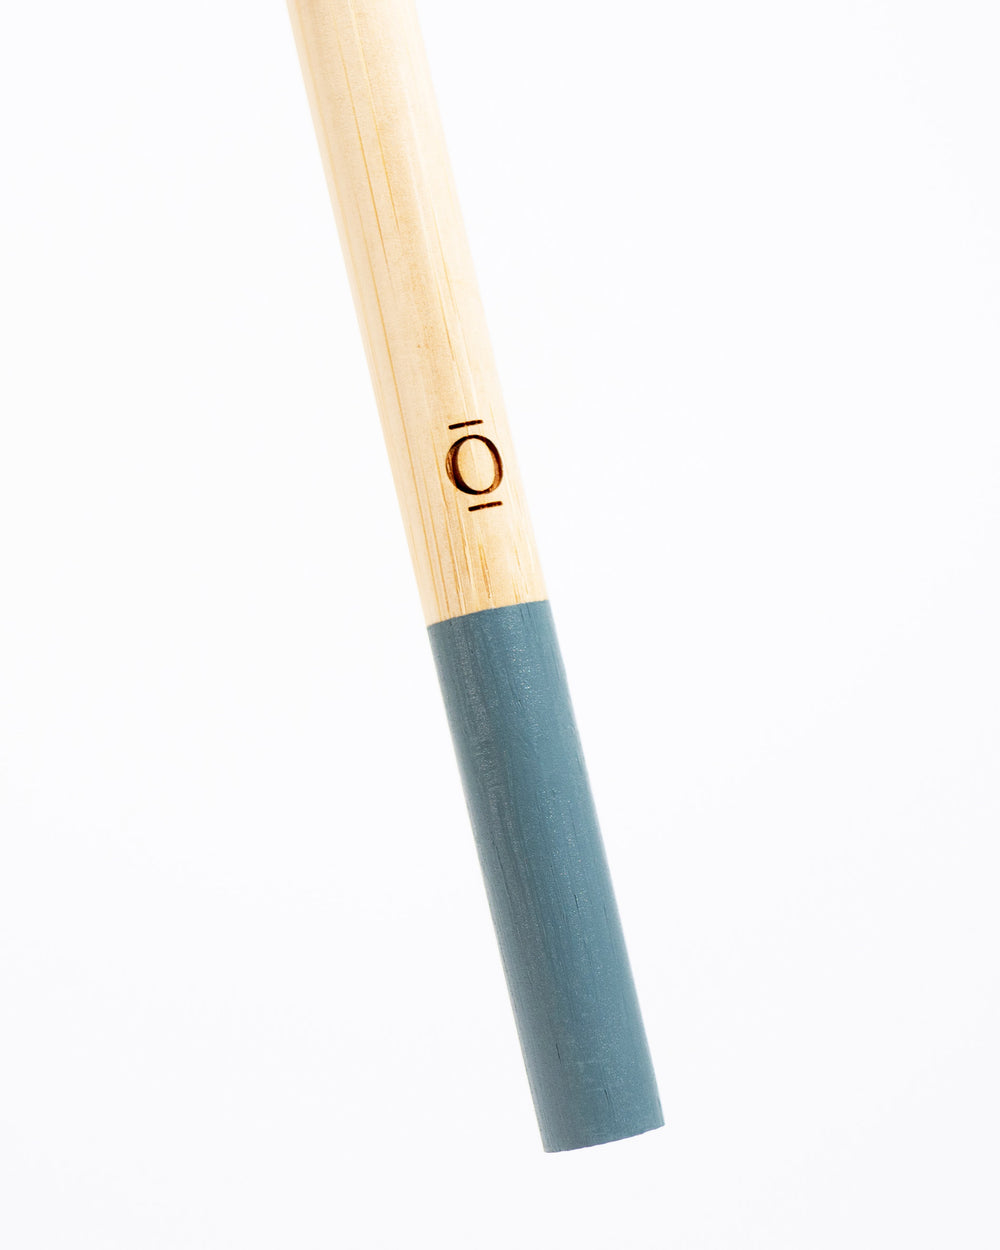 YOKU Blue Clay Bamboo Toothbrush